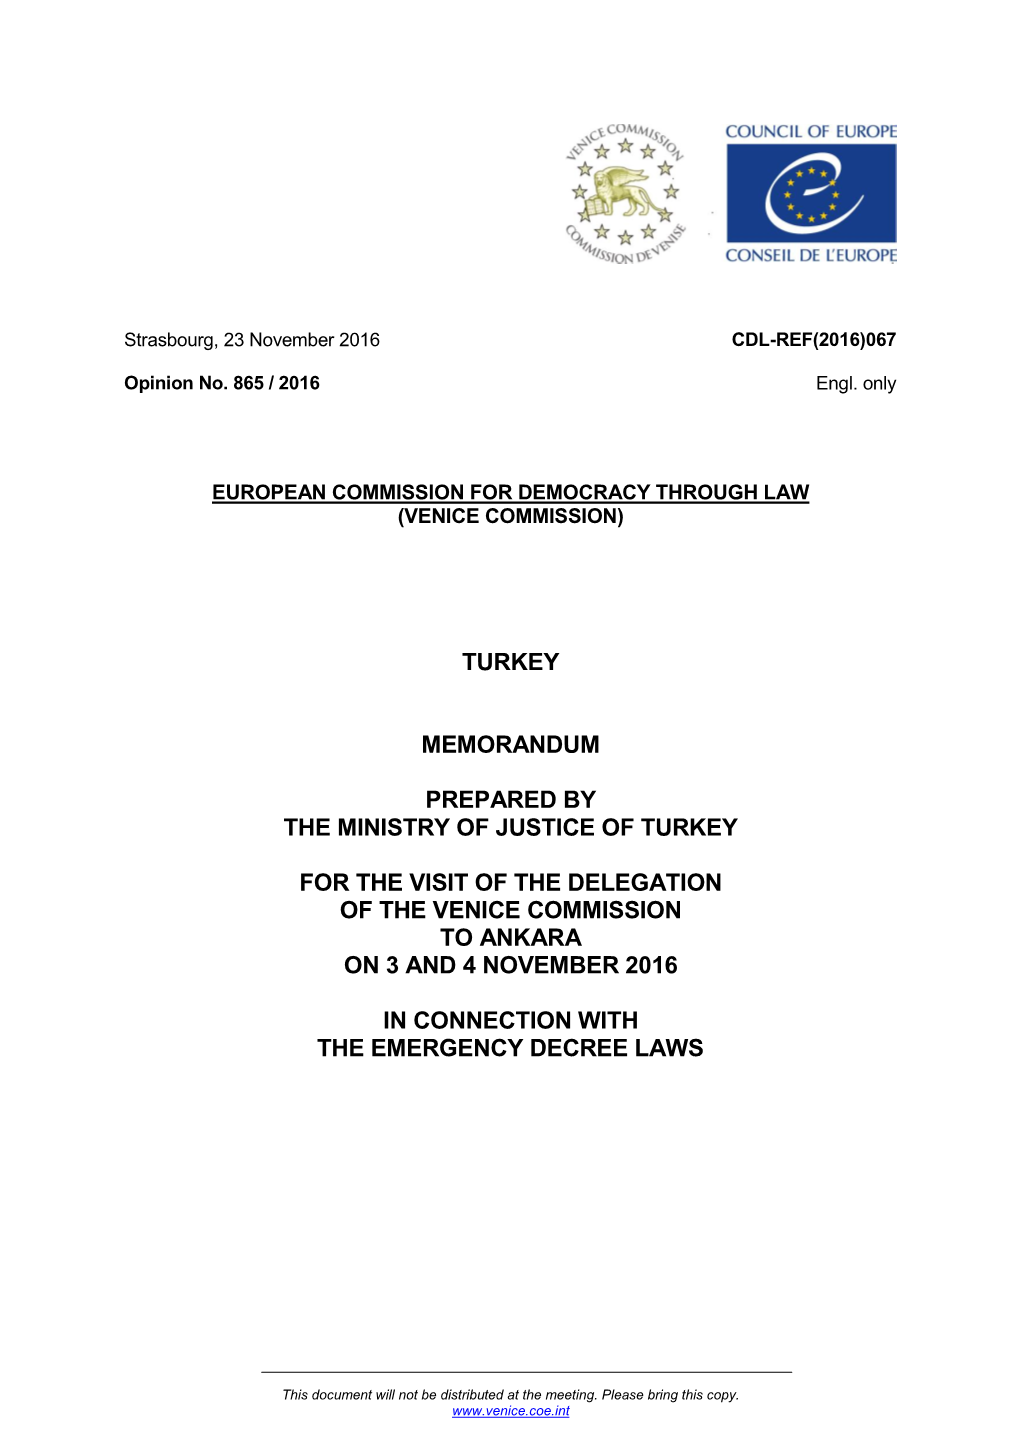 Turkey Memorandum Prepared by the Ministry Of